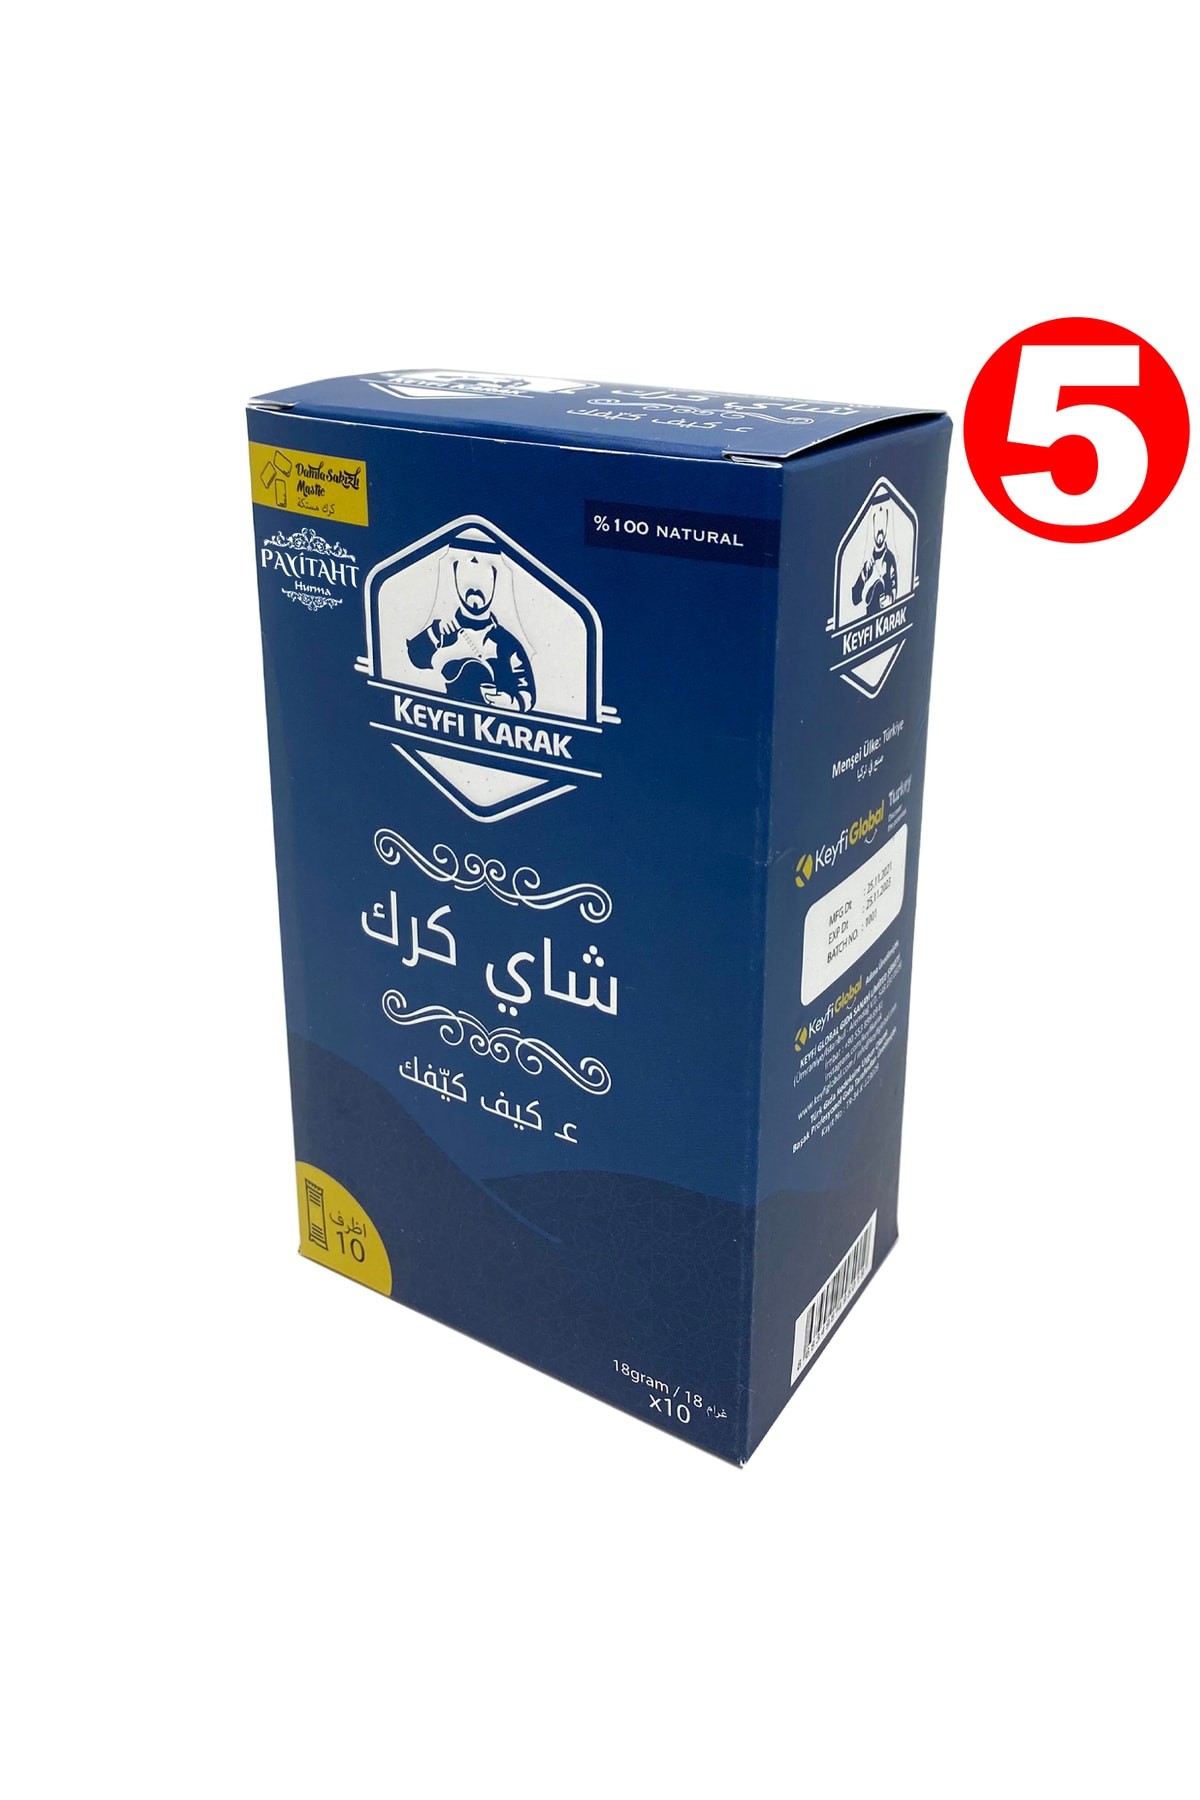 Keyfi Karak Tea Mastic Flavored 10 Stick x 5 Pack